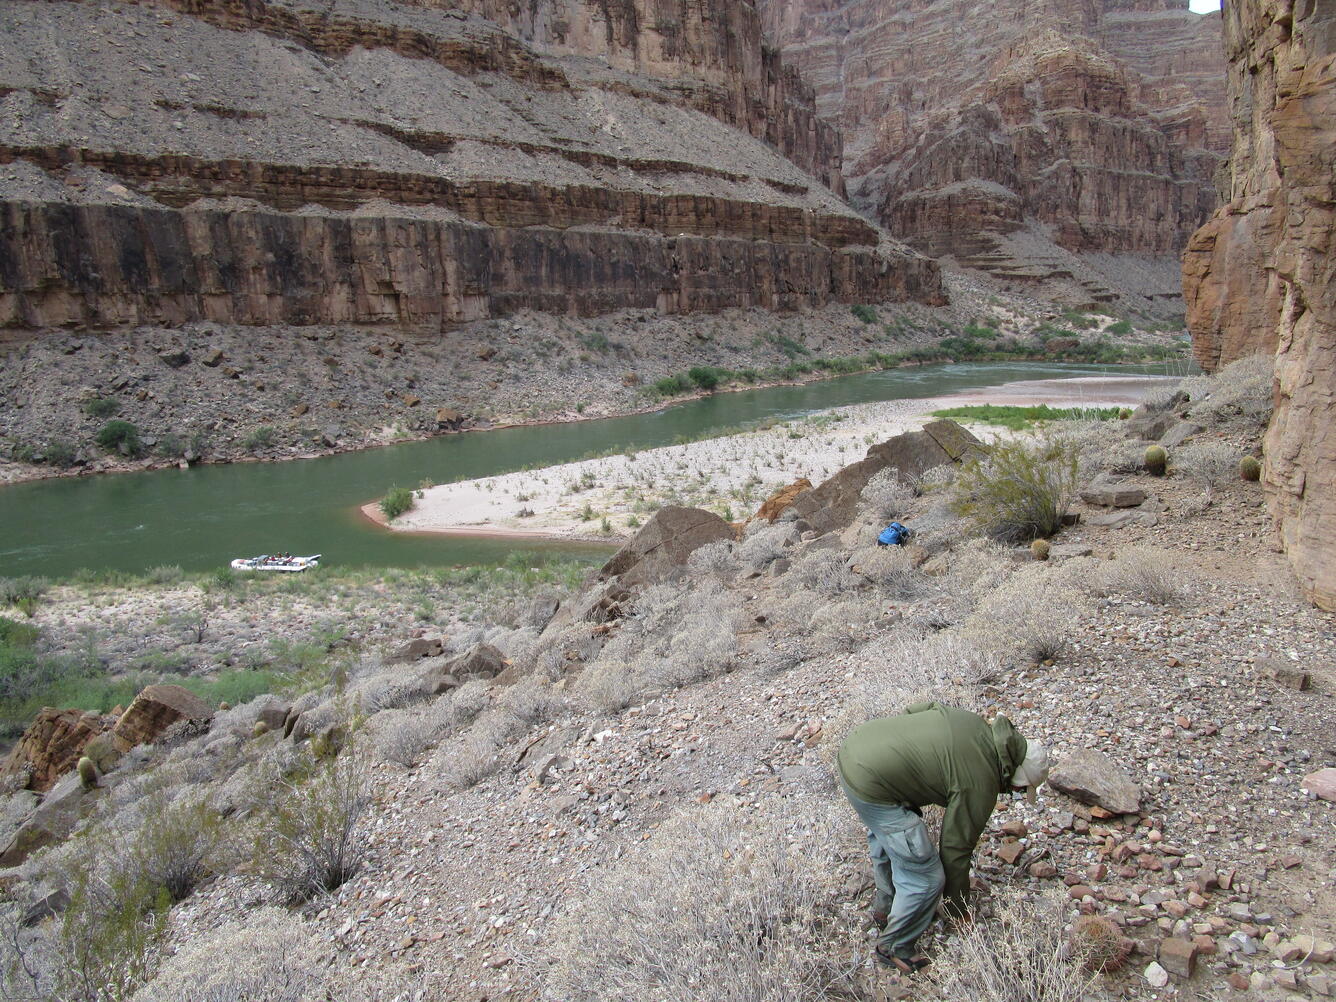 Sandbar in the Colorado River in the Grand Canyon with the tall walls of the Grand Canyon in the background